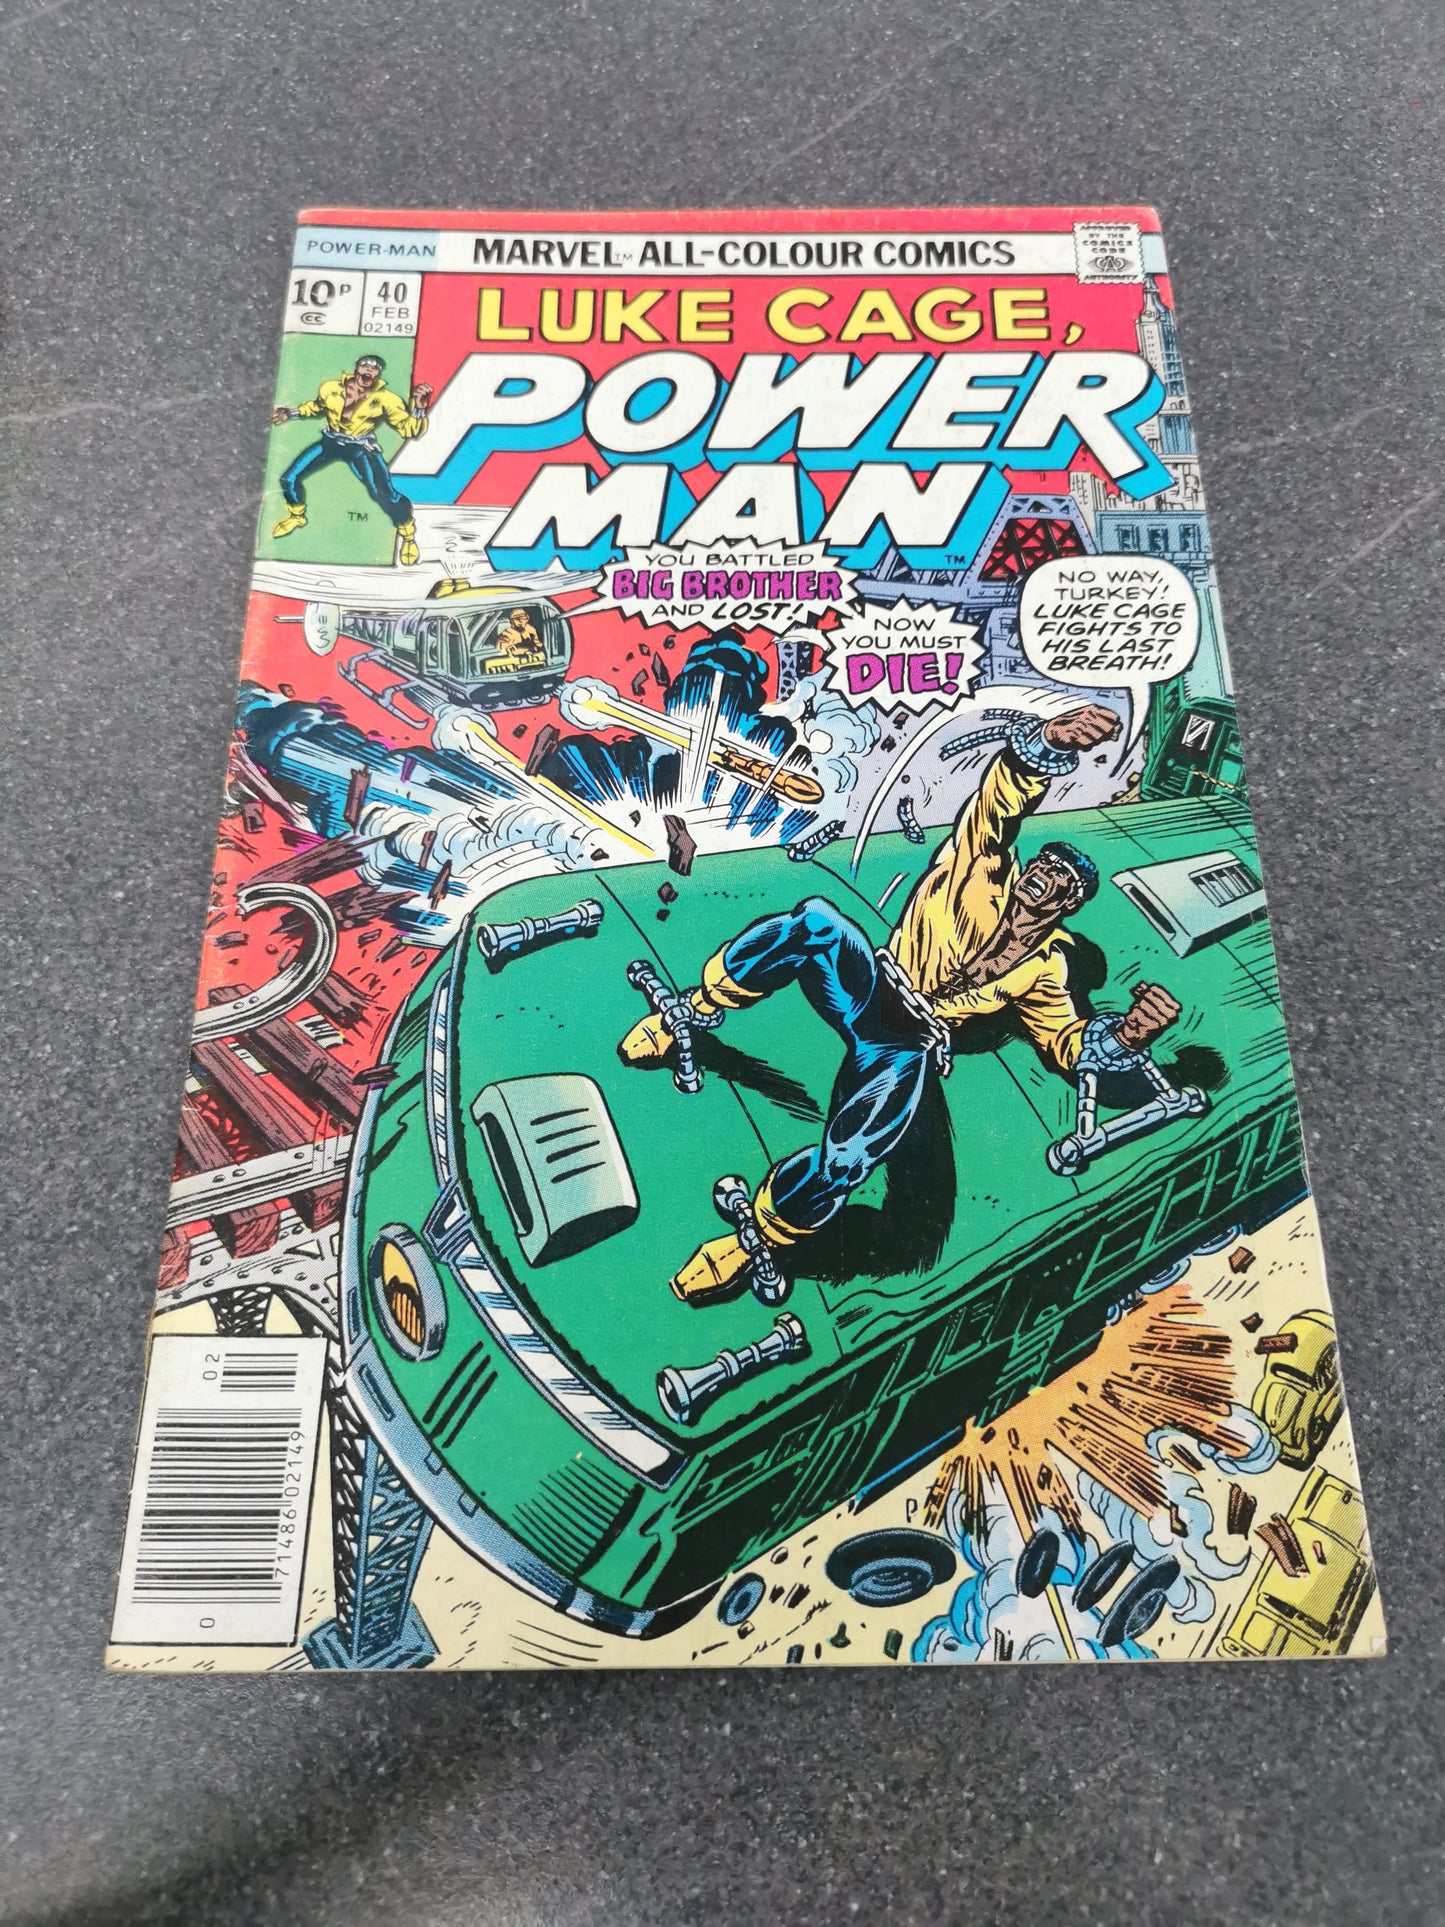 Power Man #40 1977 Marvel comic